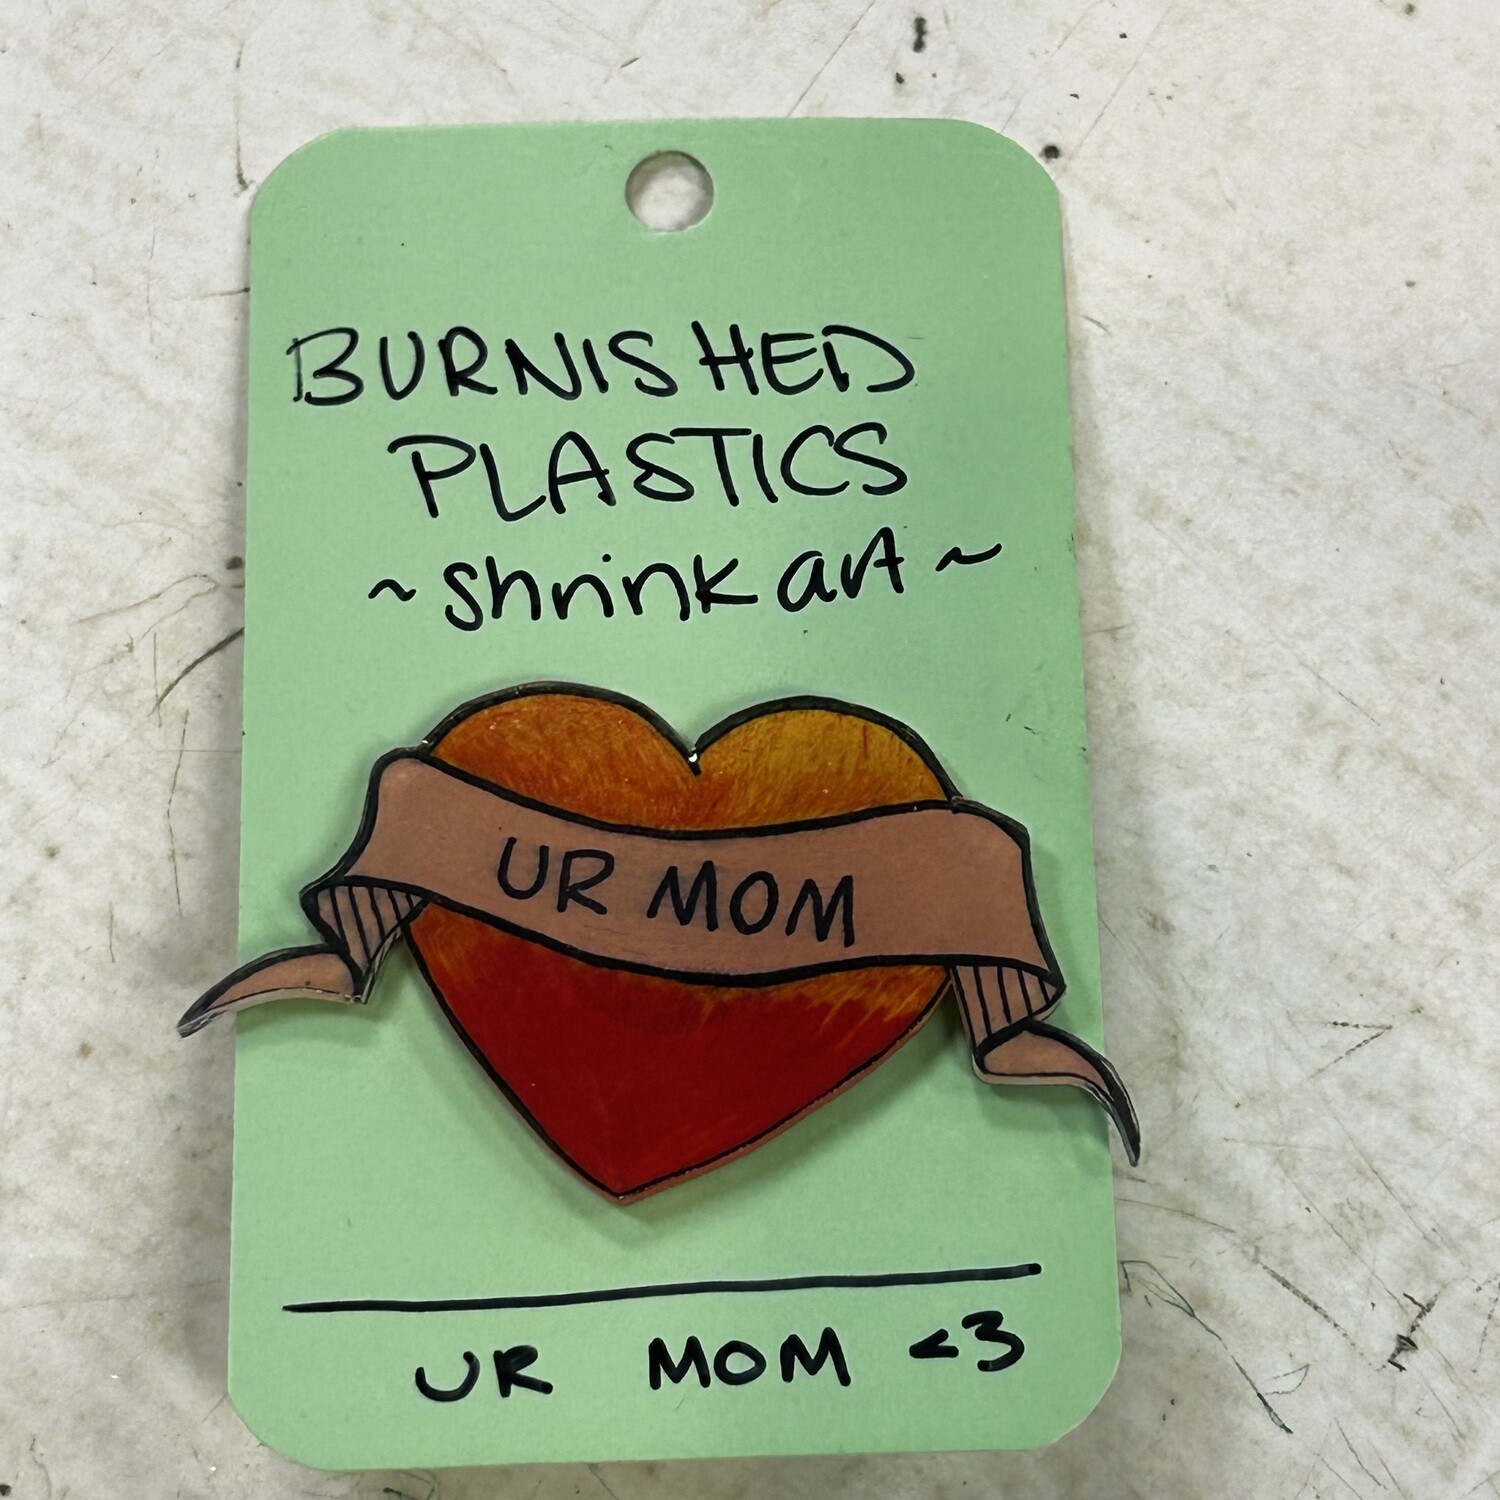 BURNISHED PLASTICS: UR MOM - Shrink Art Pin by Kaiju Cabal